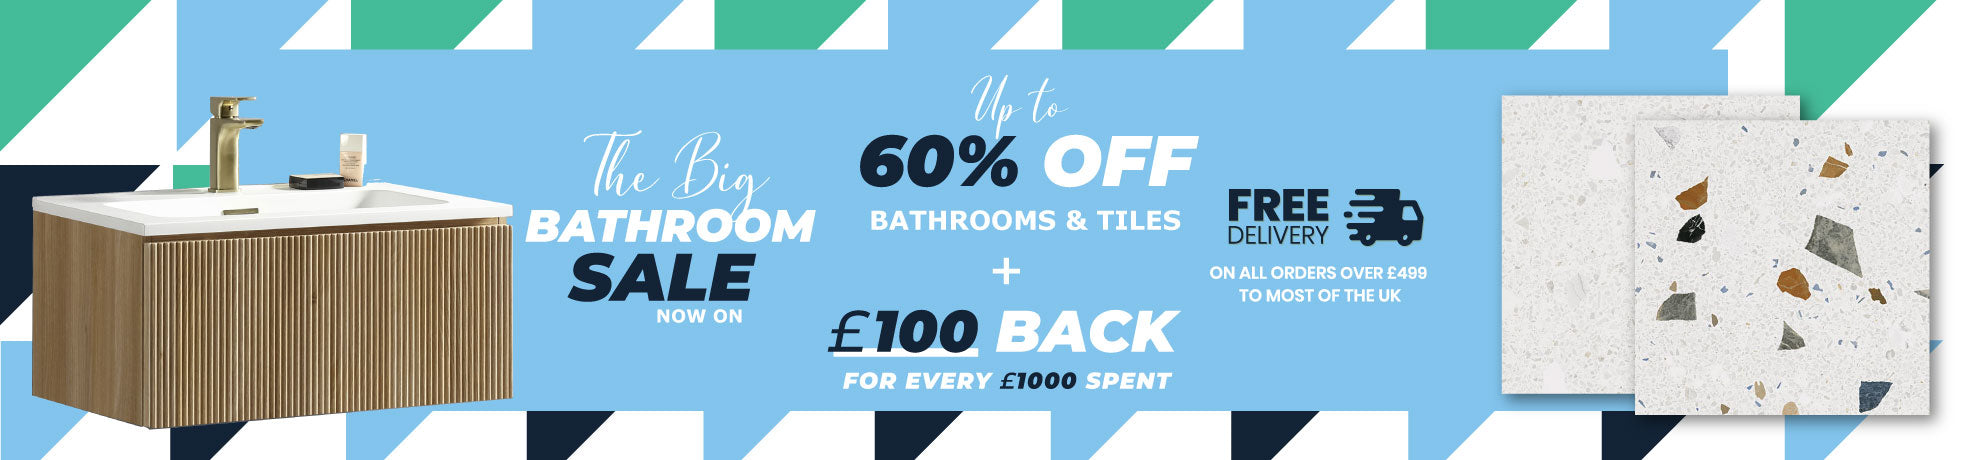 Enjoy up to 60% Off Premium Bathrooms